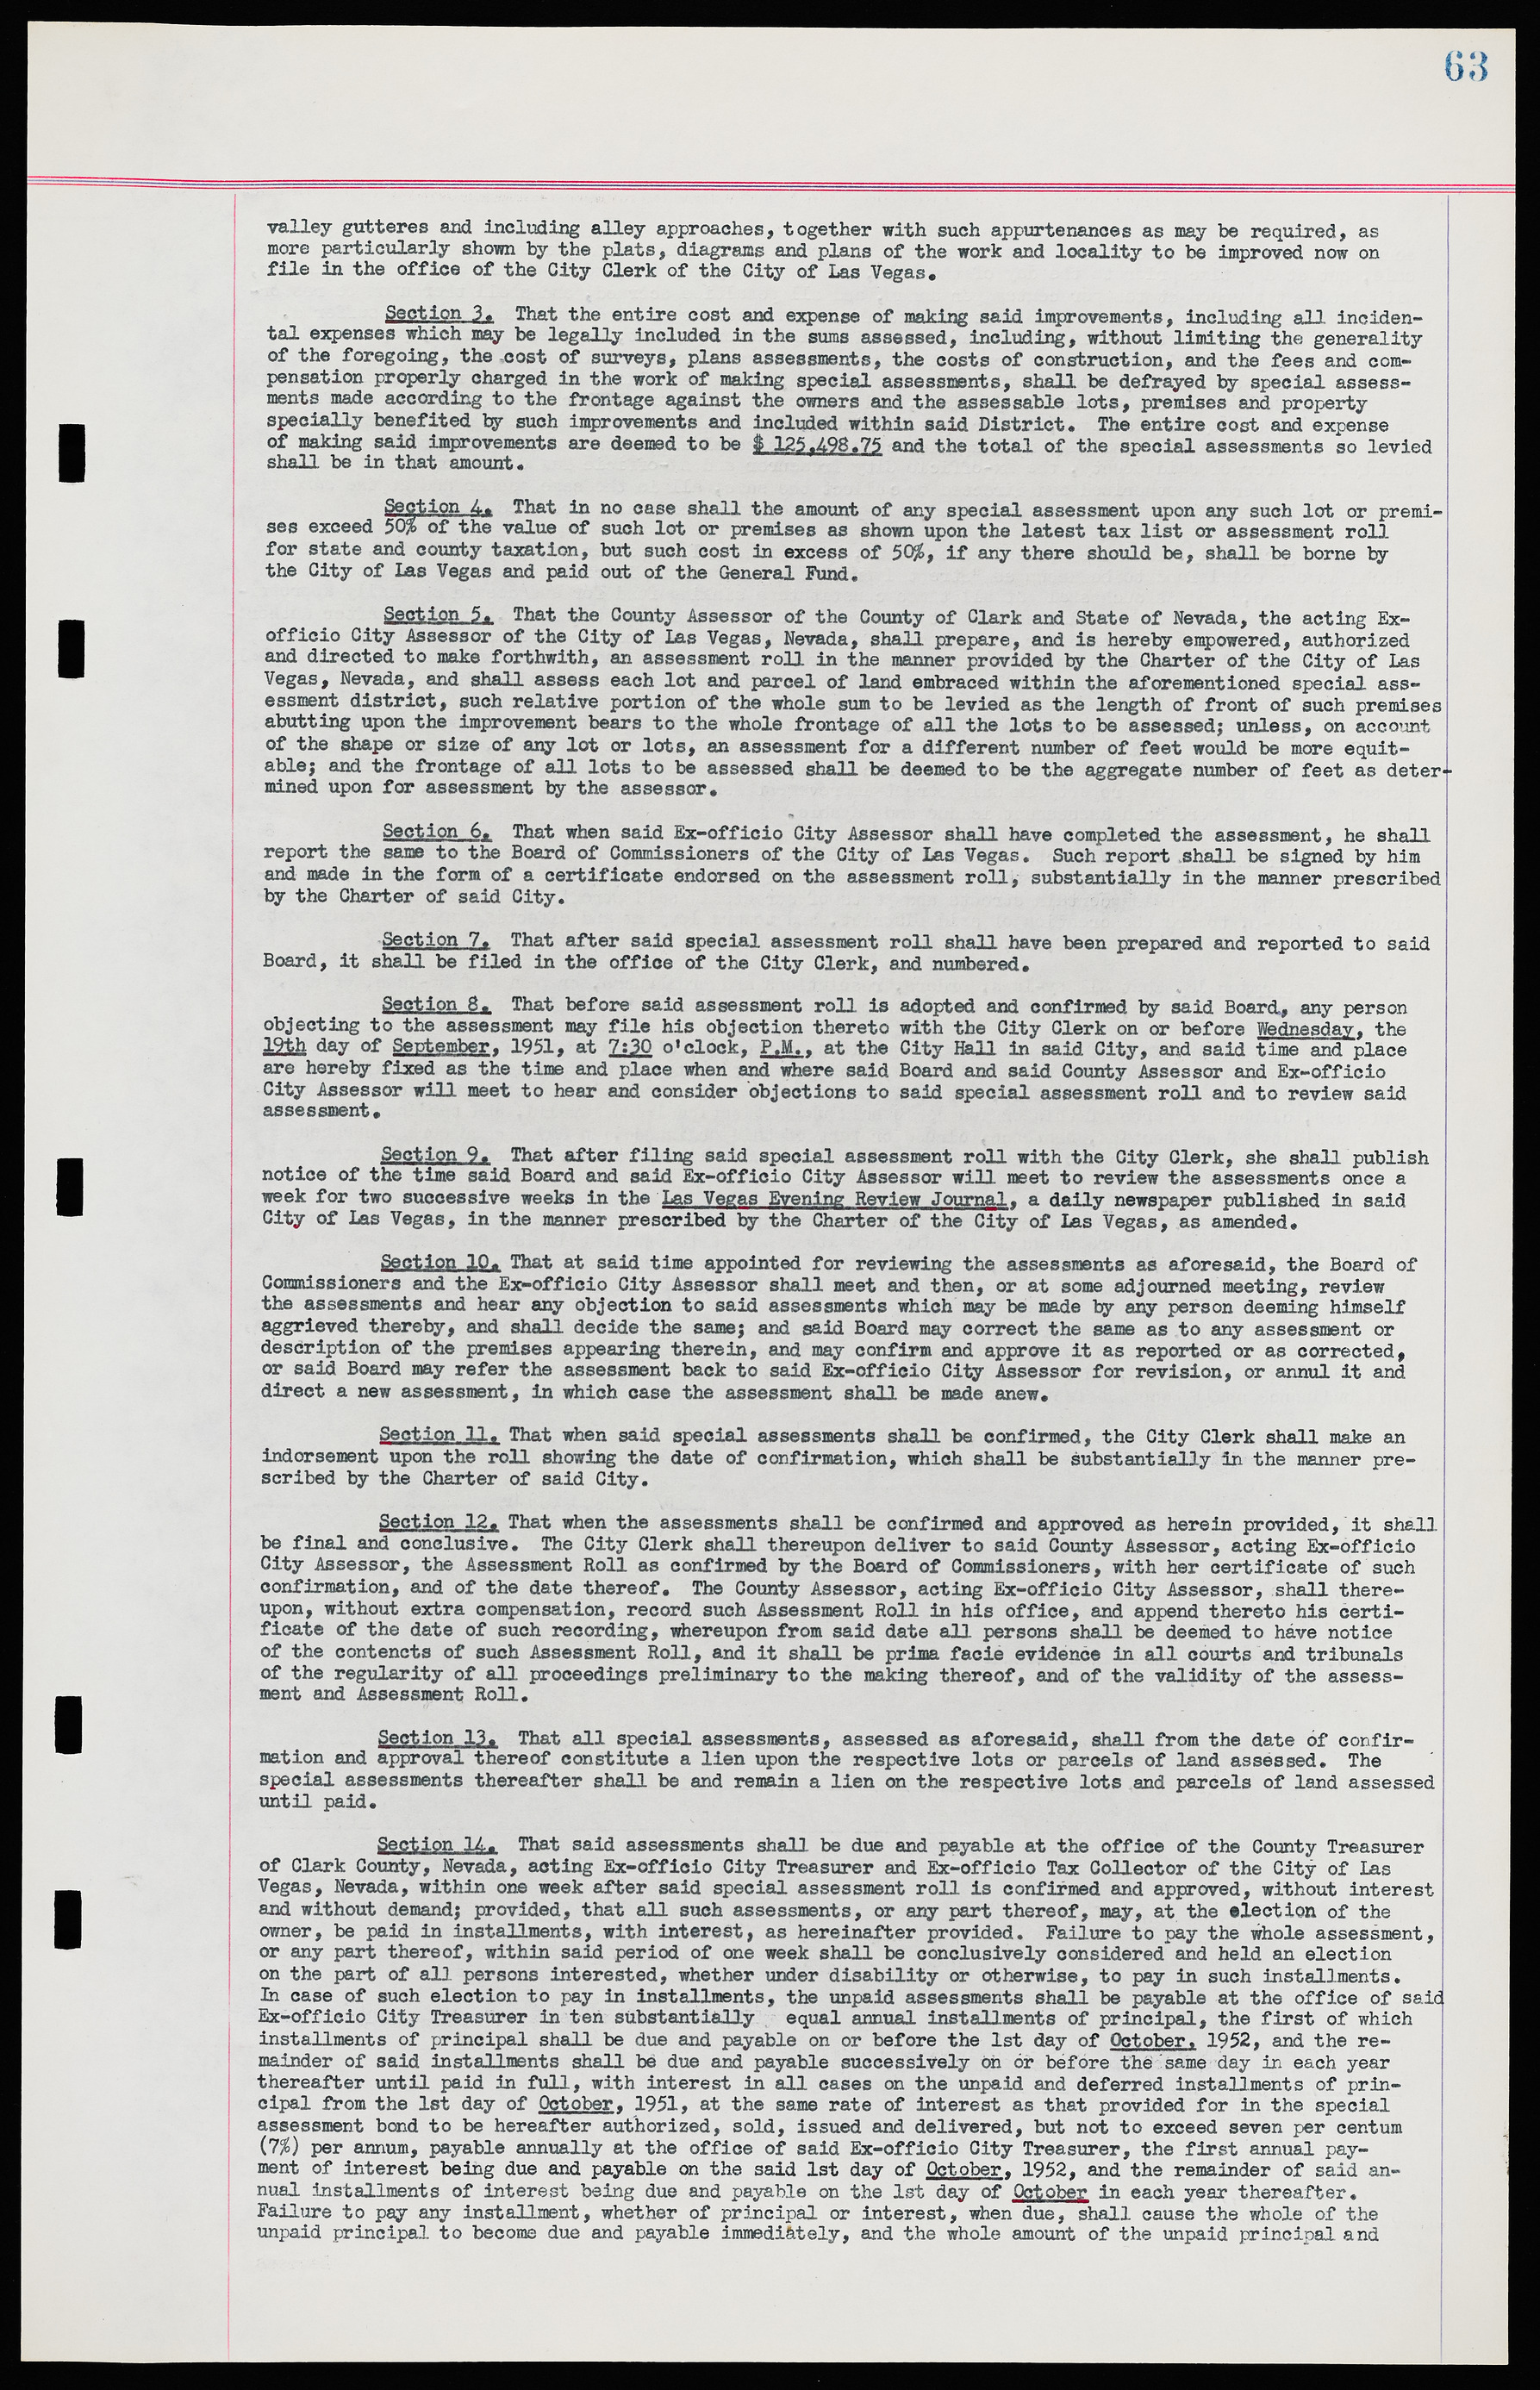 Las Vegas City Ordinances, November 13, 1950 to August 6, 1958, lvc000015-71